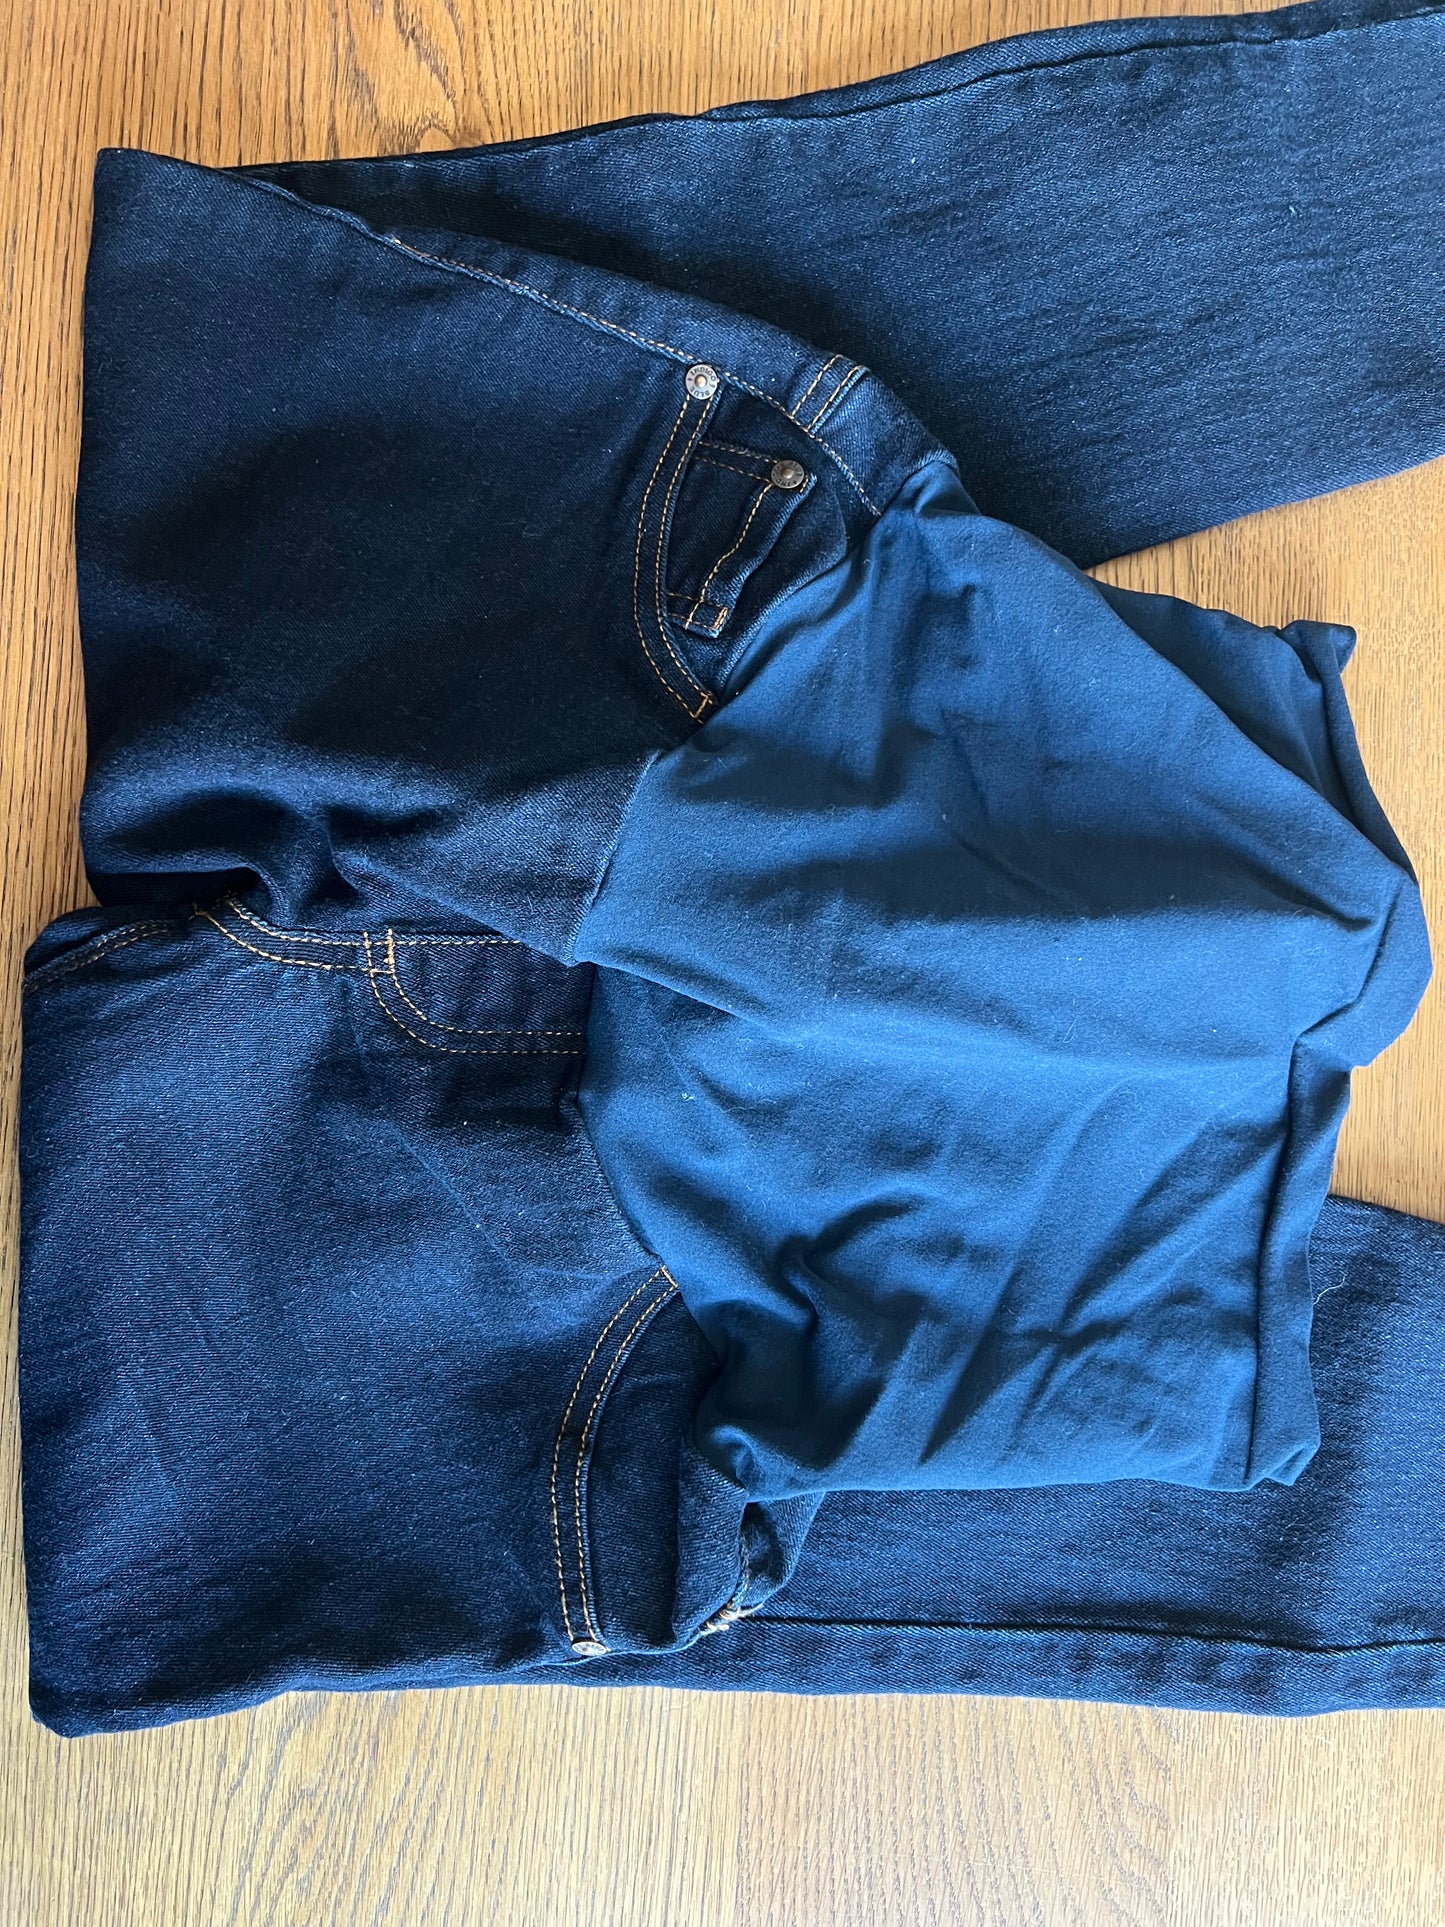 Indigo Blue full panel maternity jeans size Petite